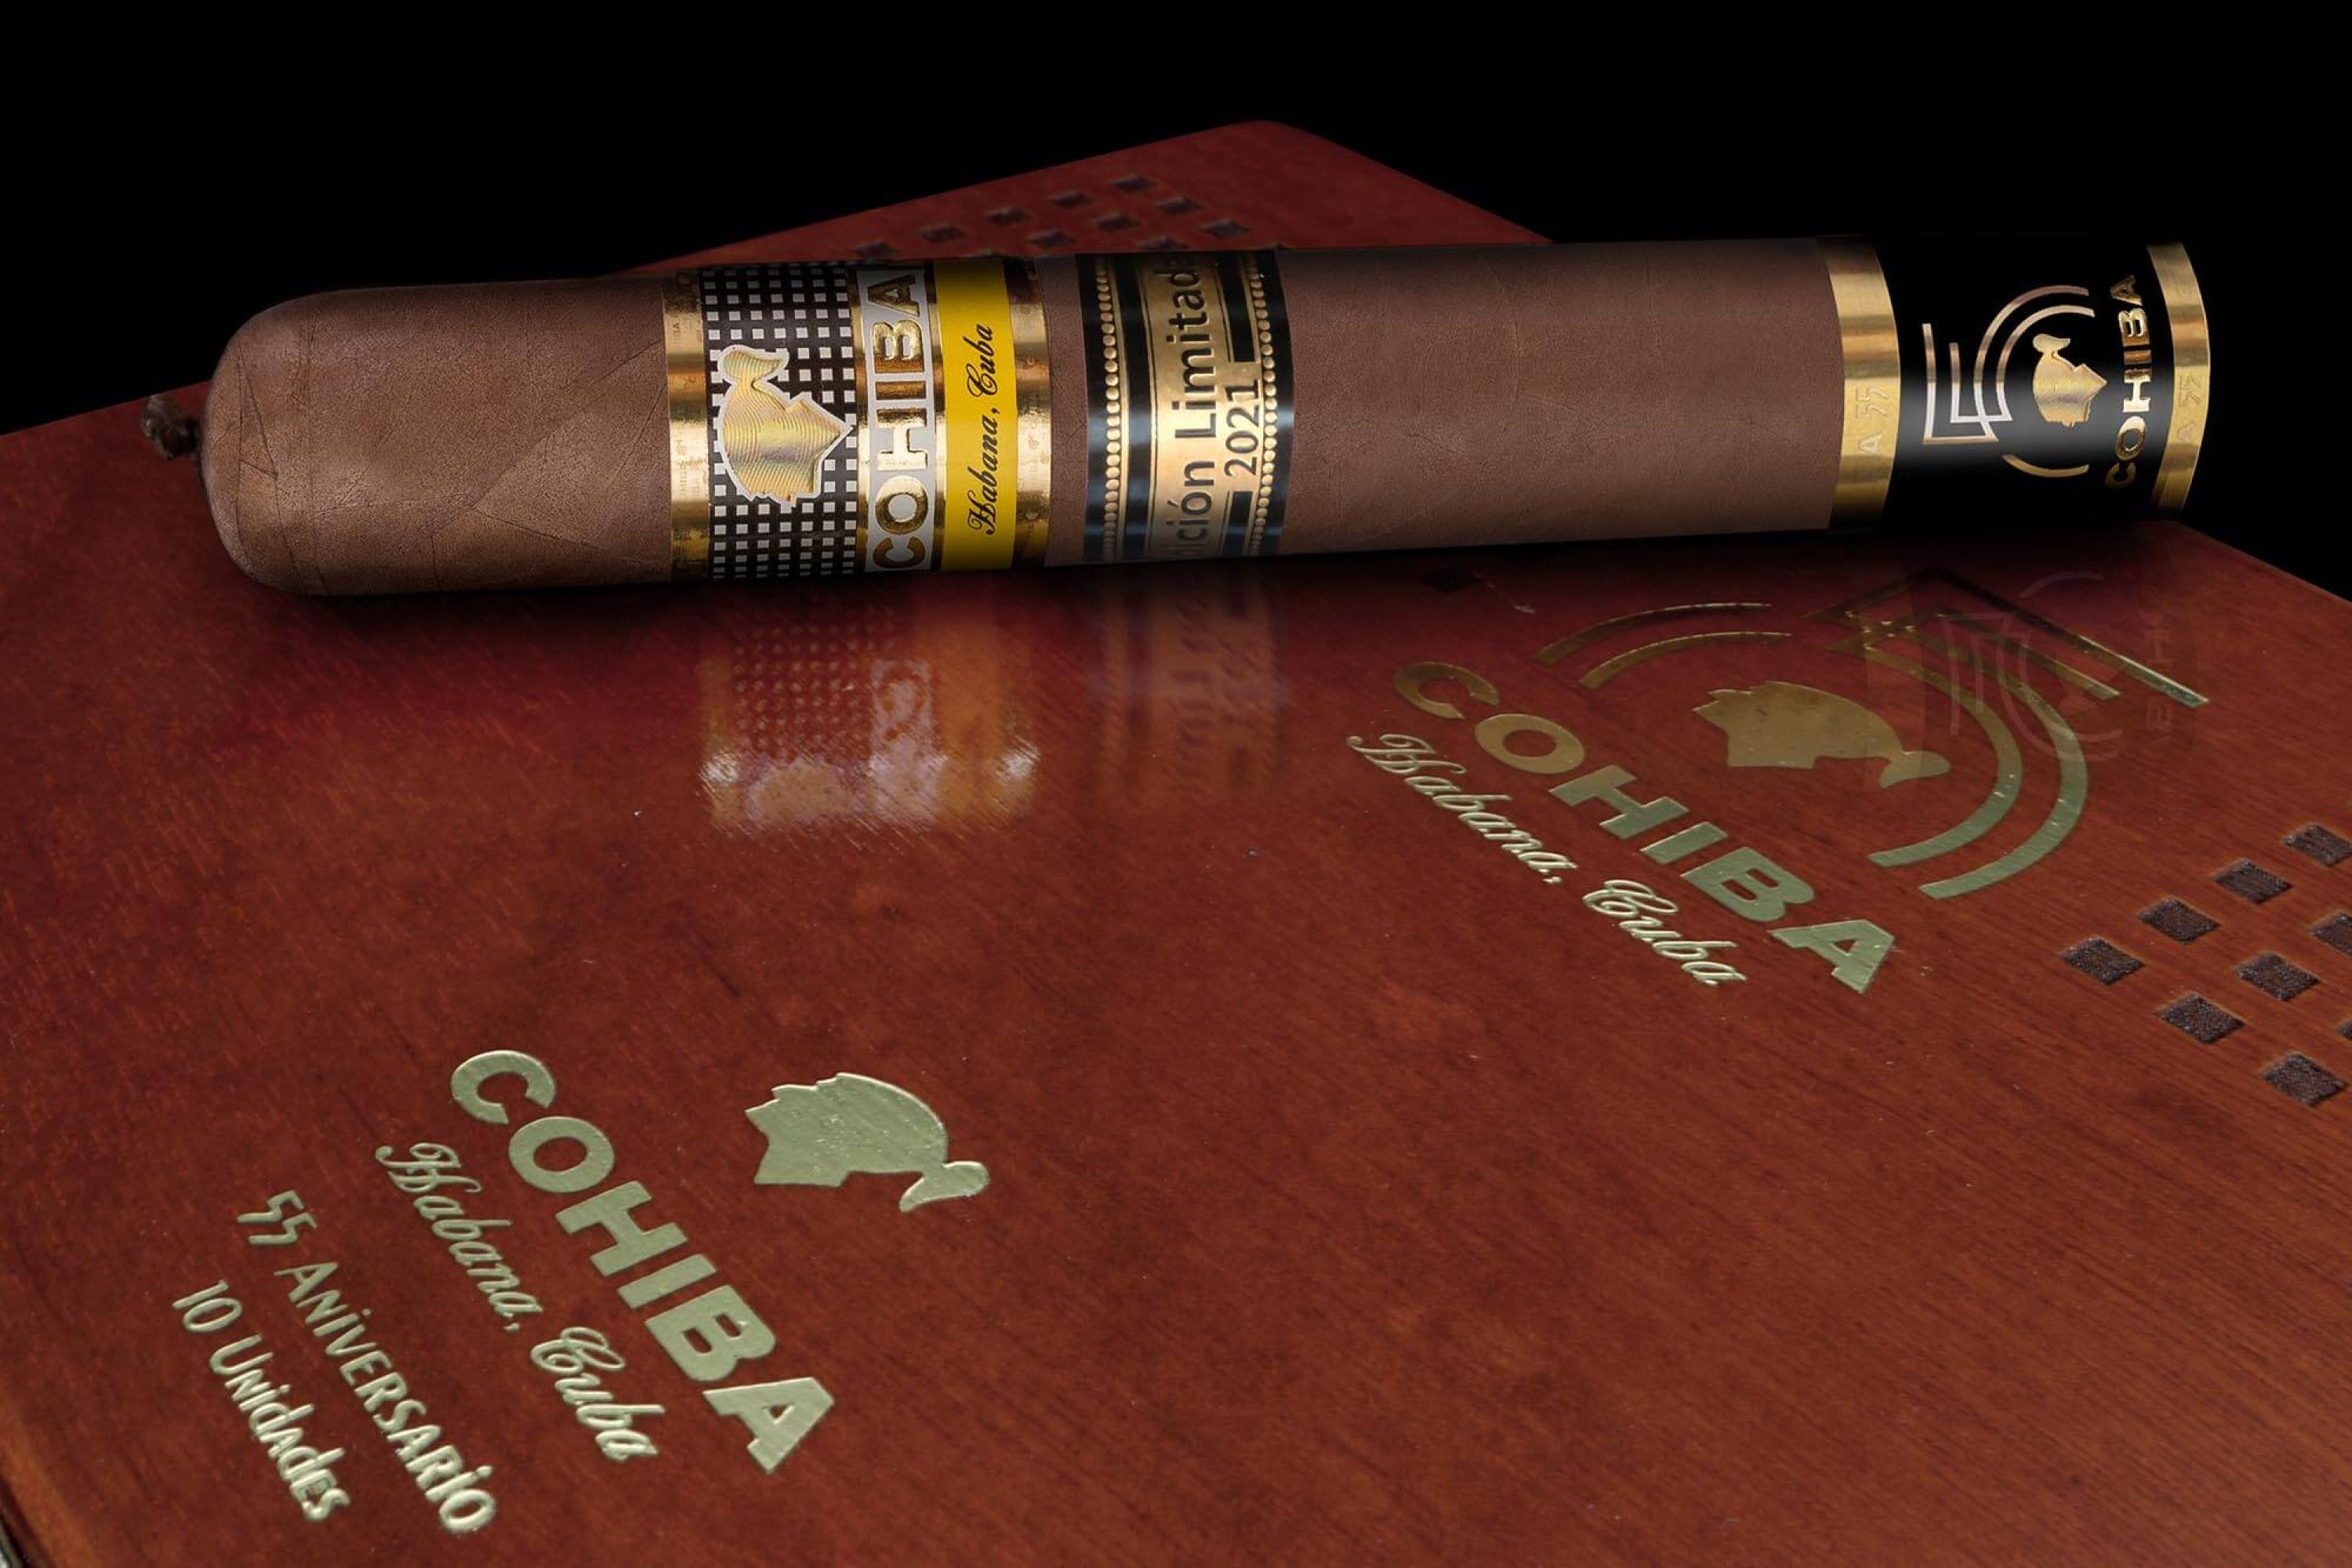 The Cohiba 55 Aniversario Limited Edition cigar